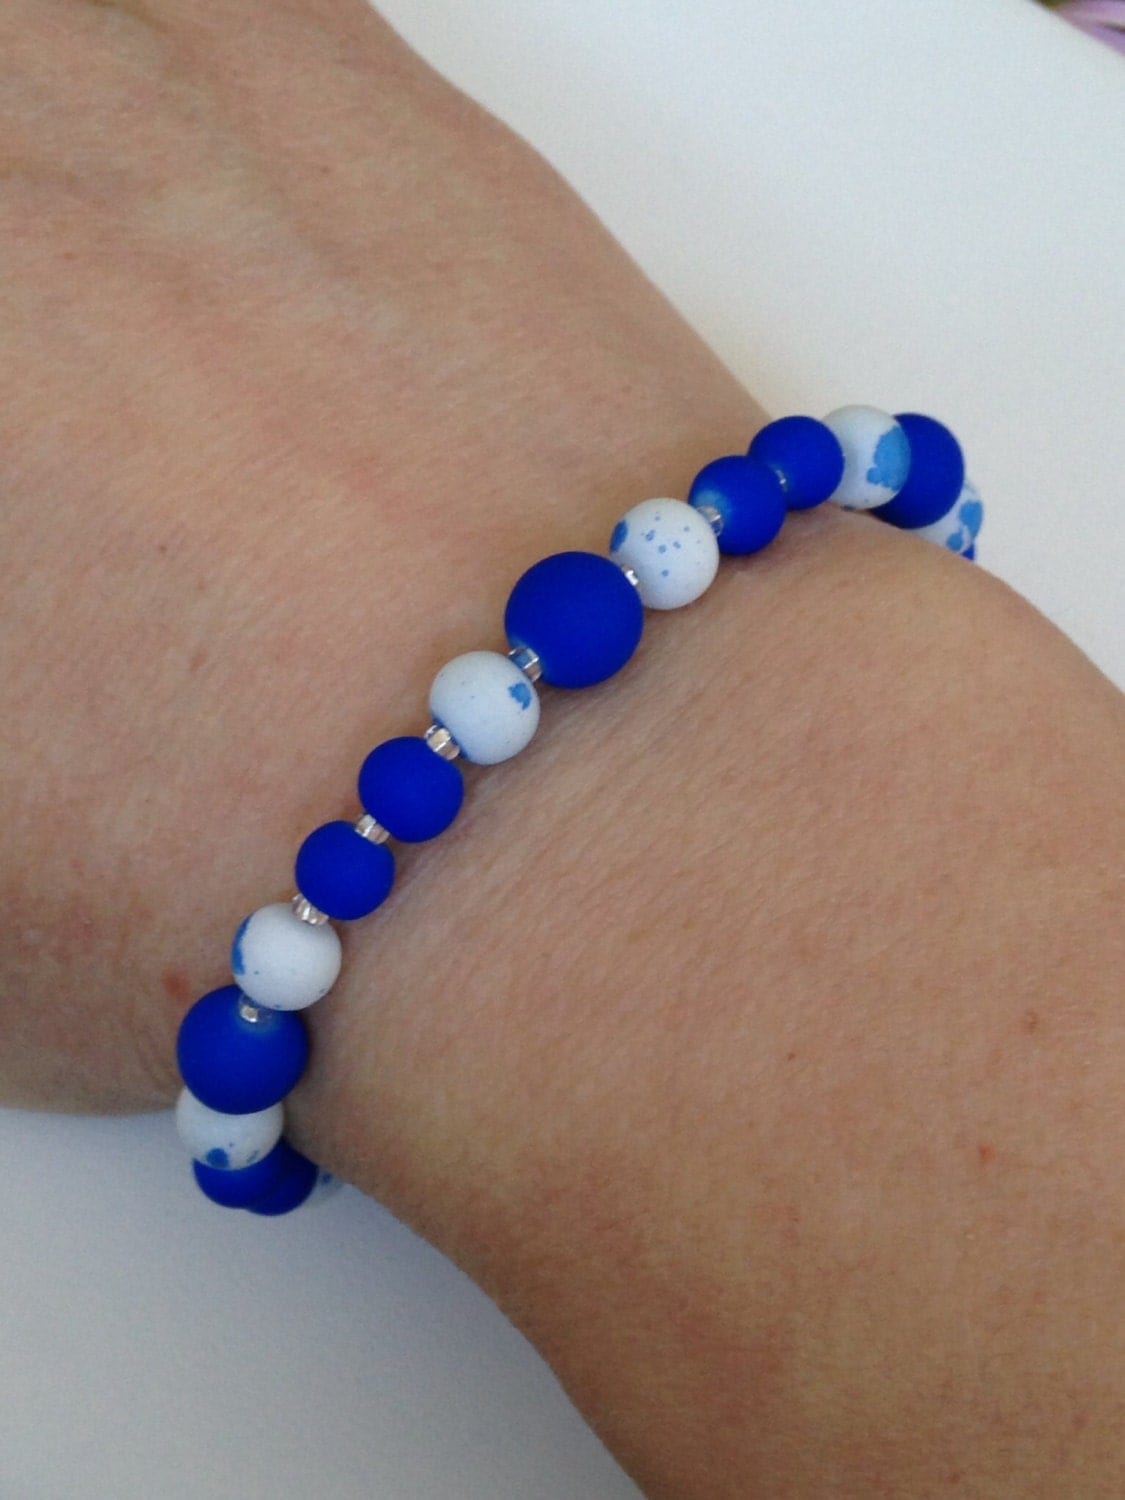 Blue and white bead bracelet